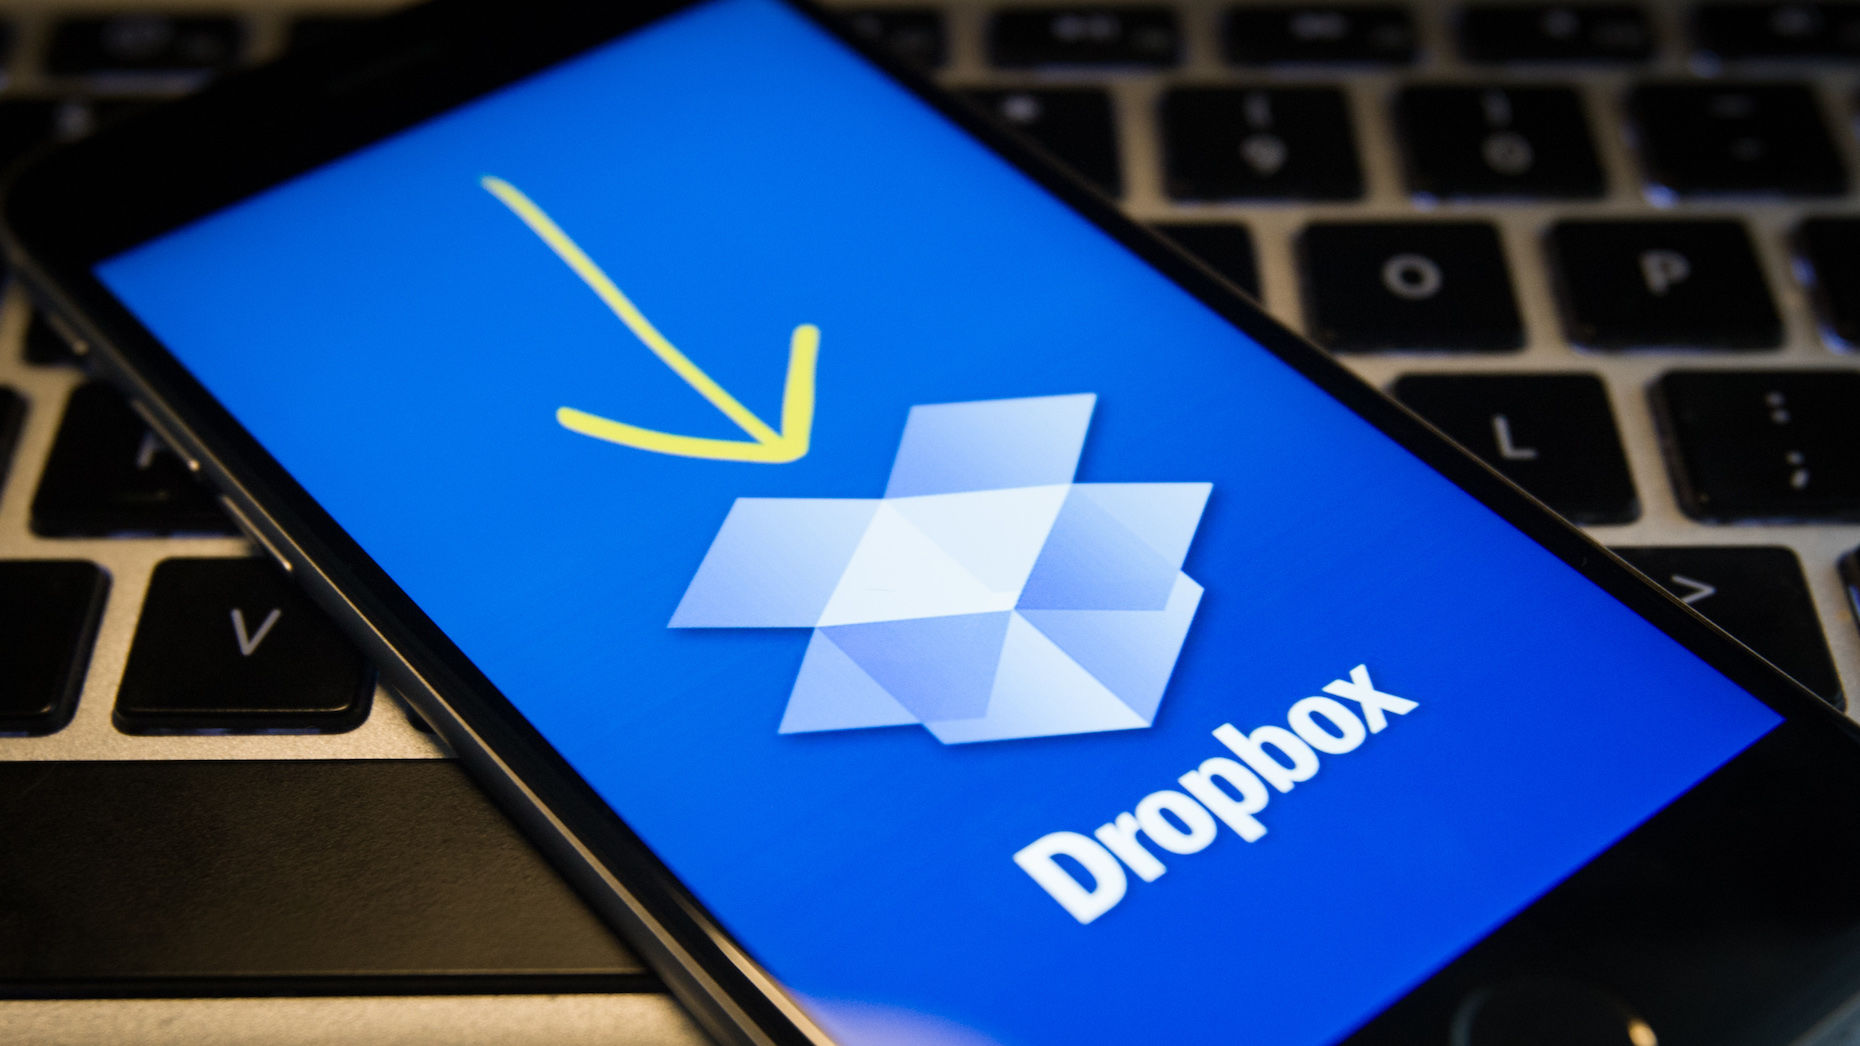 dropbox for business logo